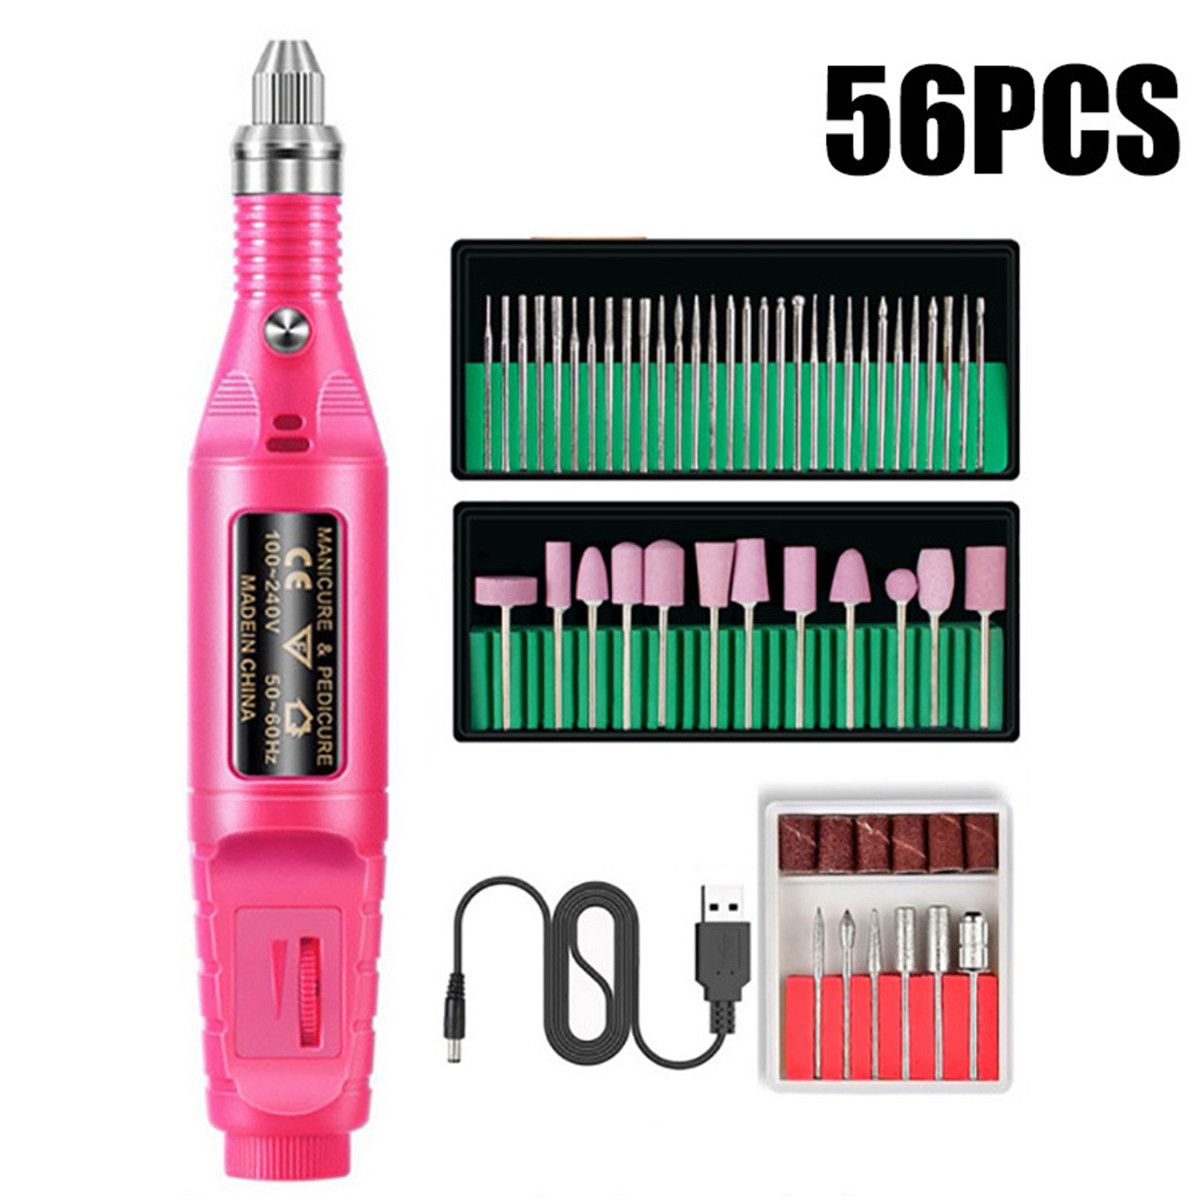 214425156pcs-Electric-Nail-File-Art-Drill-Pen-Kit-Professional-Pedicure-Manicure-Polisher-Tool-1753881